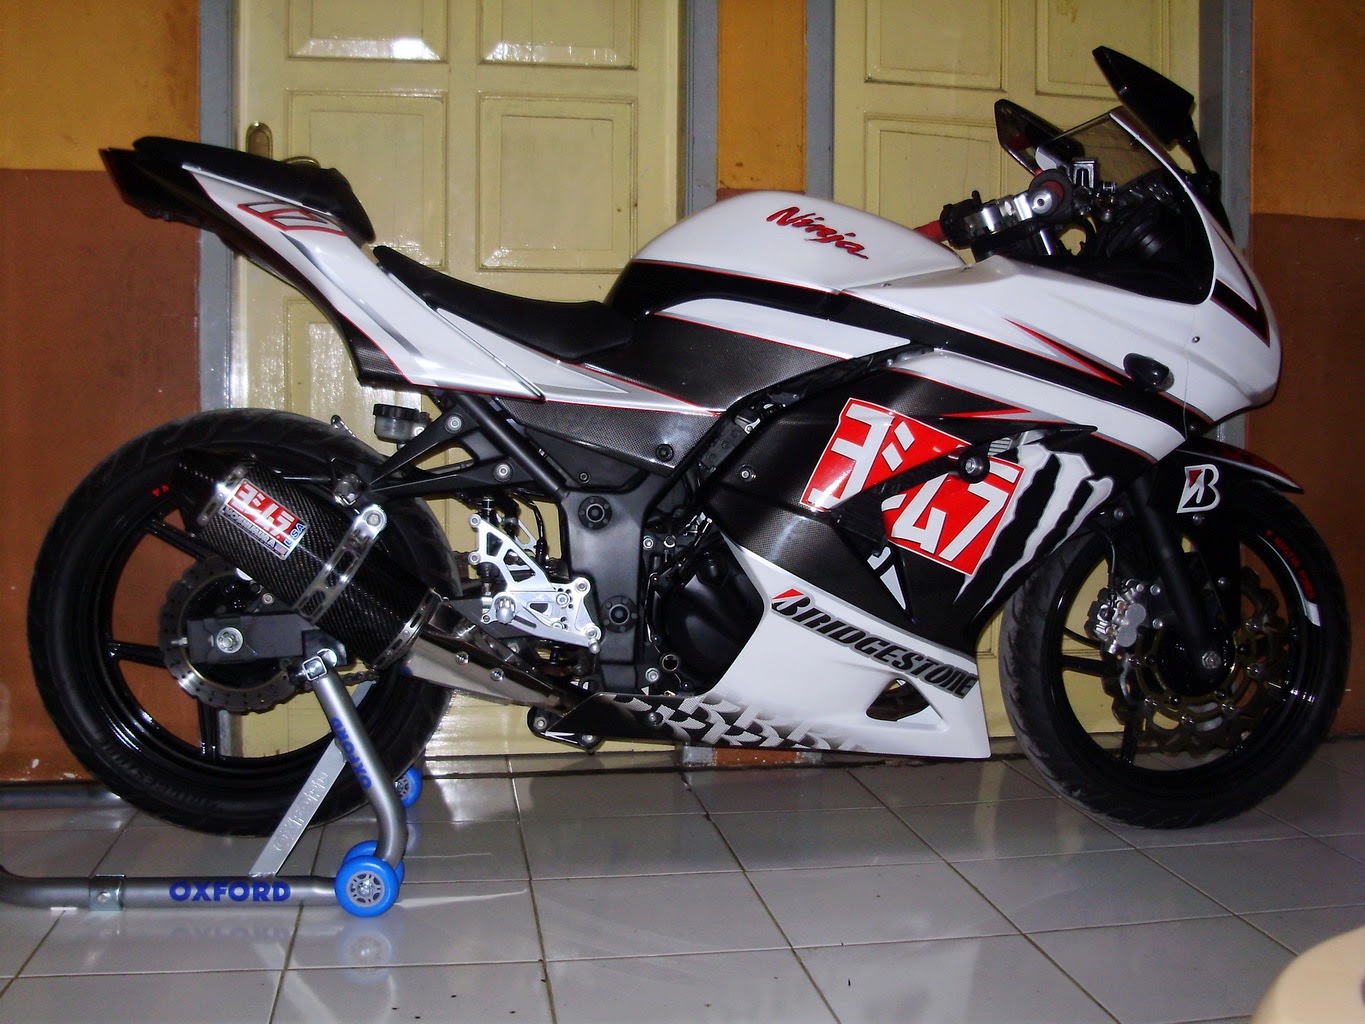 ... is the next step to continue the Kawasaki Ninja RR 150 cc 2-stroke